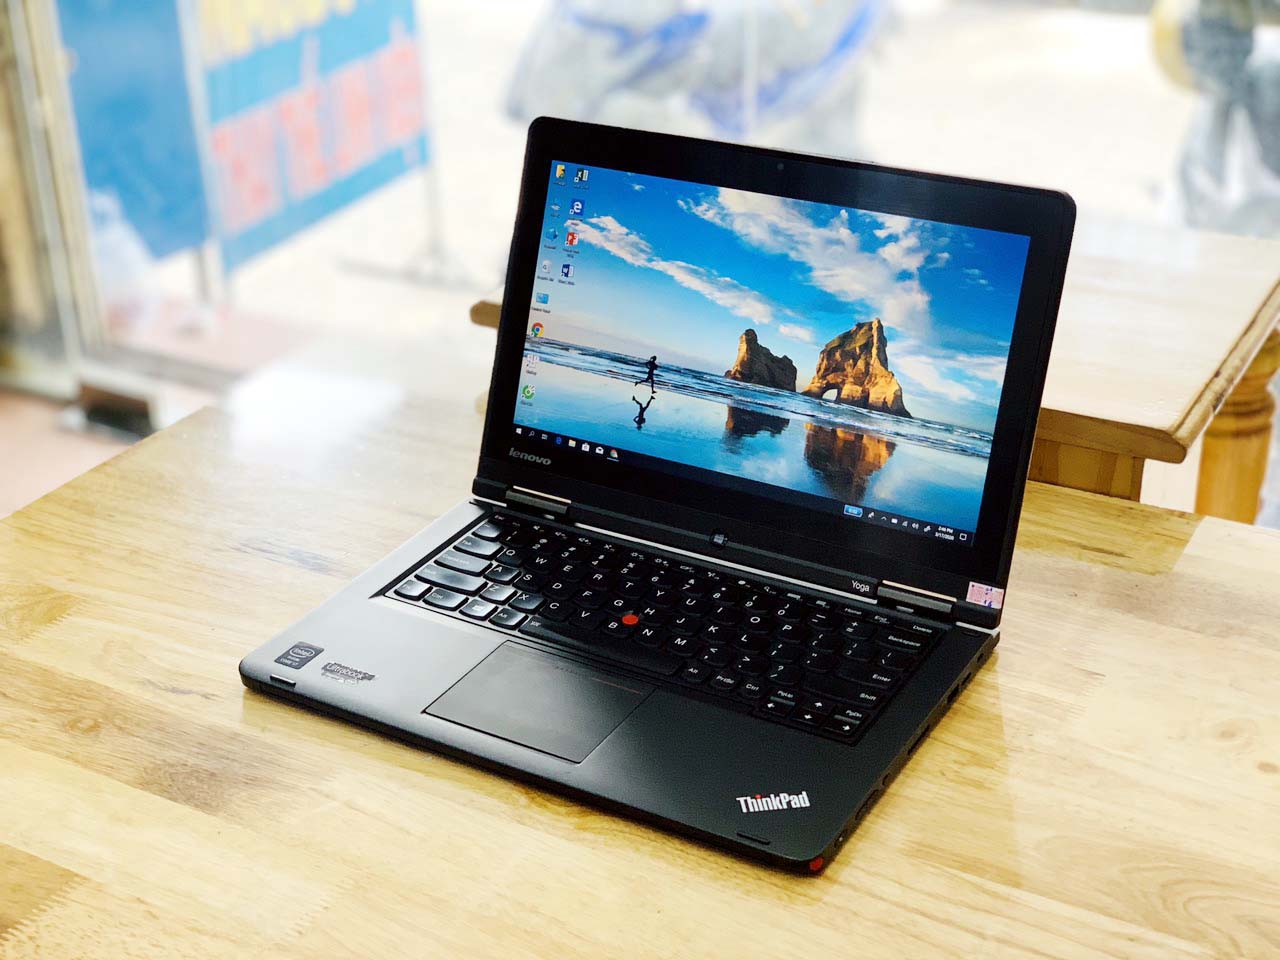 Laptop Lenovo Thinkpad Yoga S1 i7-4500U Ram 8GB SSD 256GB 12.5 inch Full HD Cảm Ứng Xoay 360 Độ